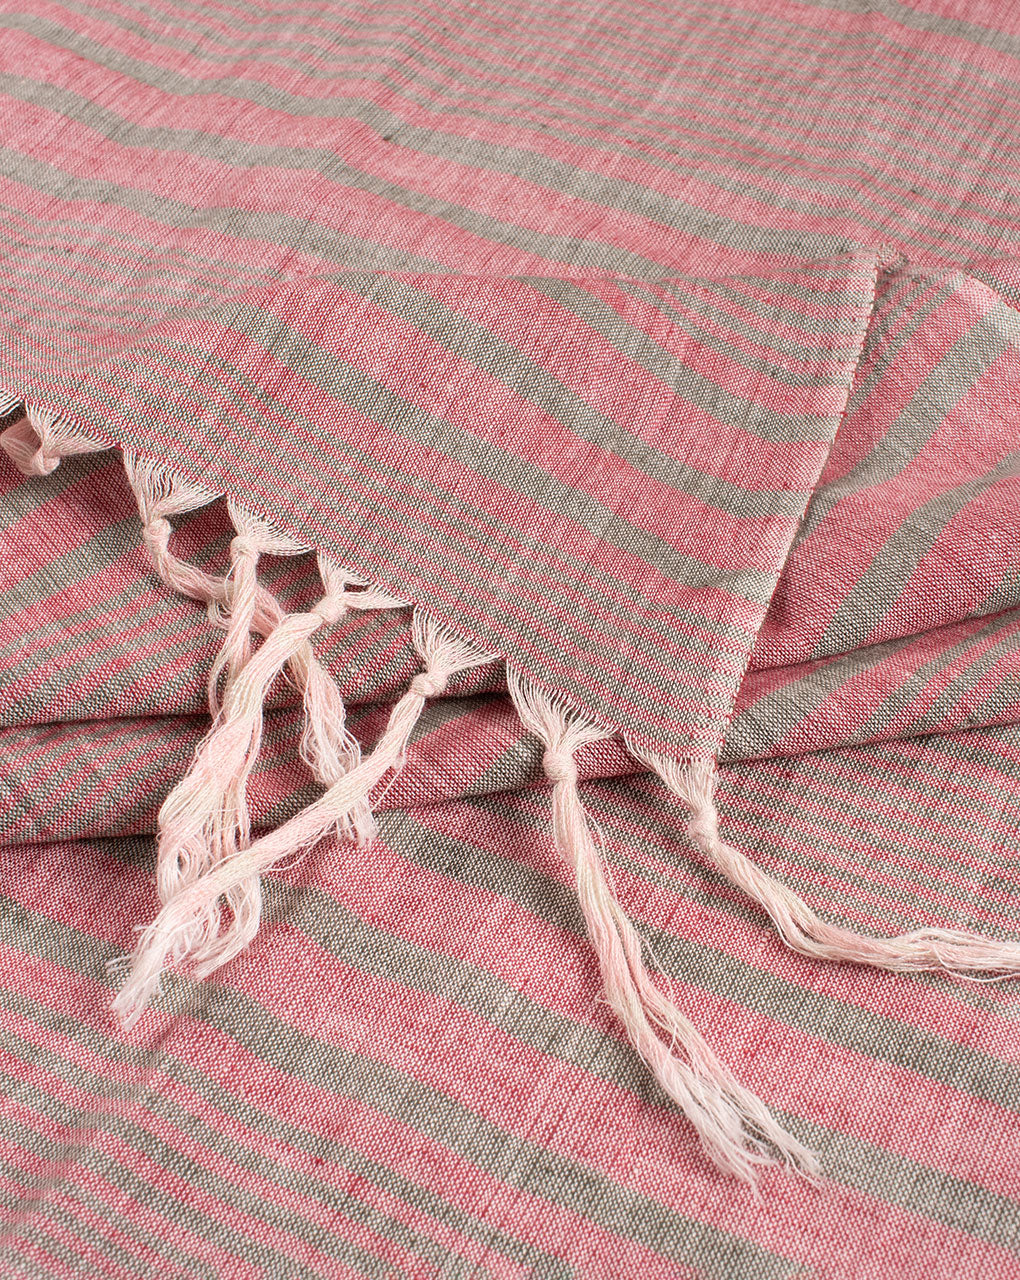 Pink Stripes Woven Bhagalpuri Cotton Stole - Fabriclore.com